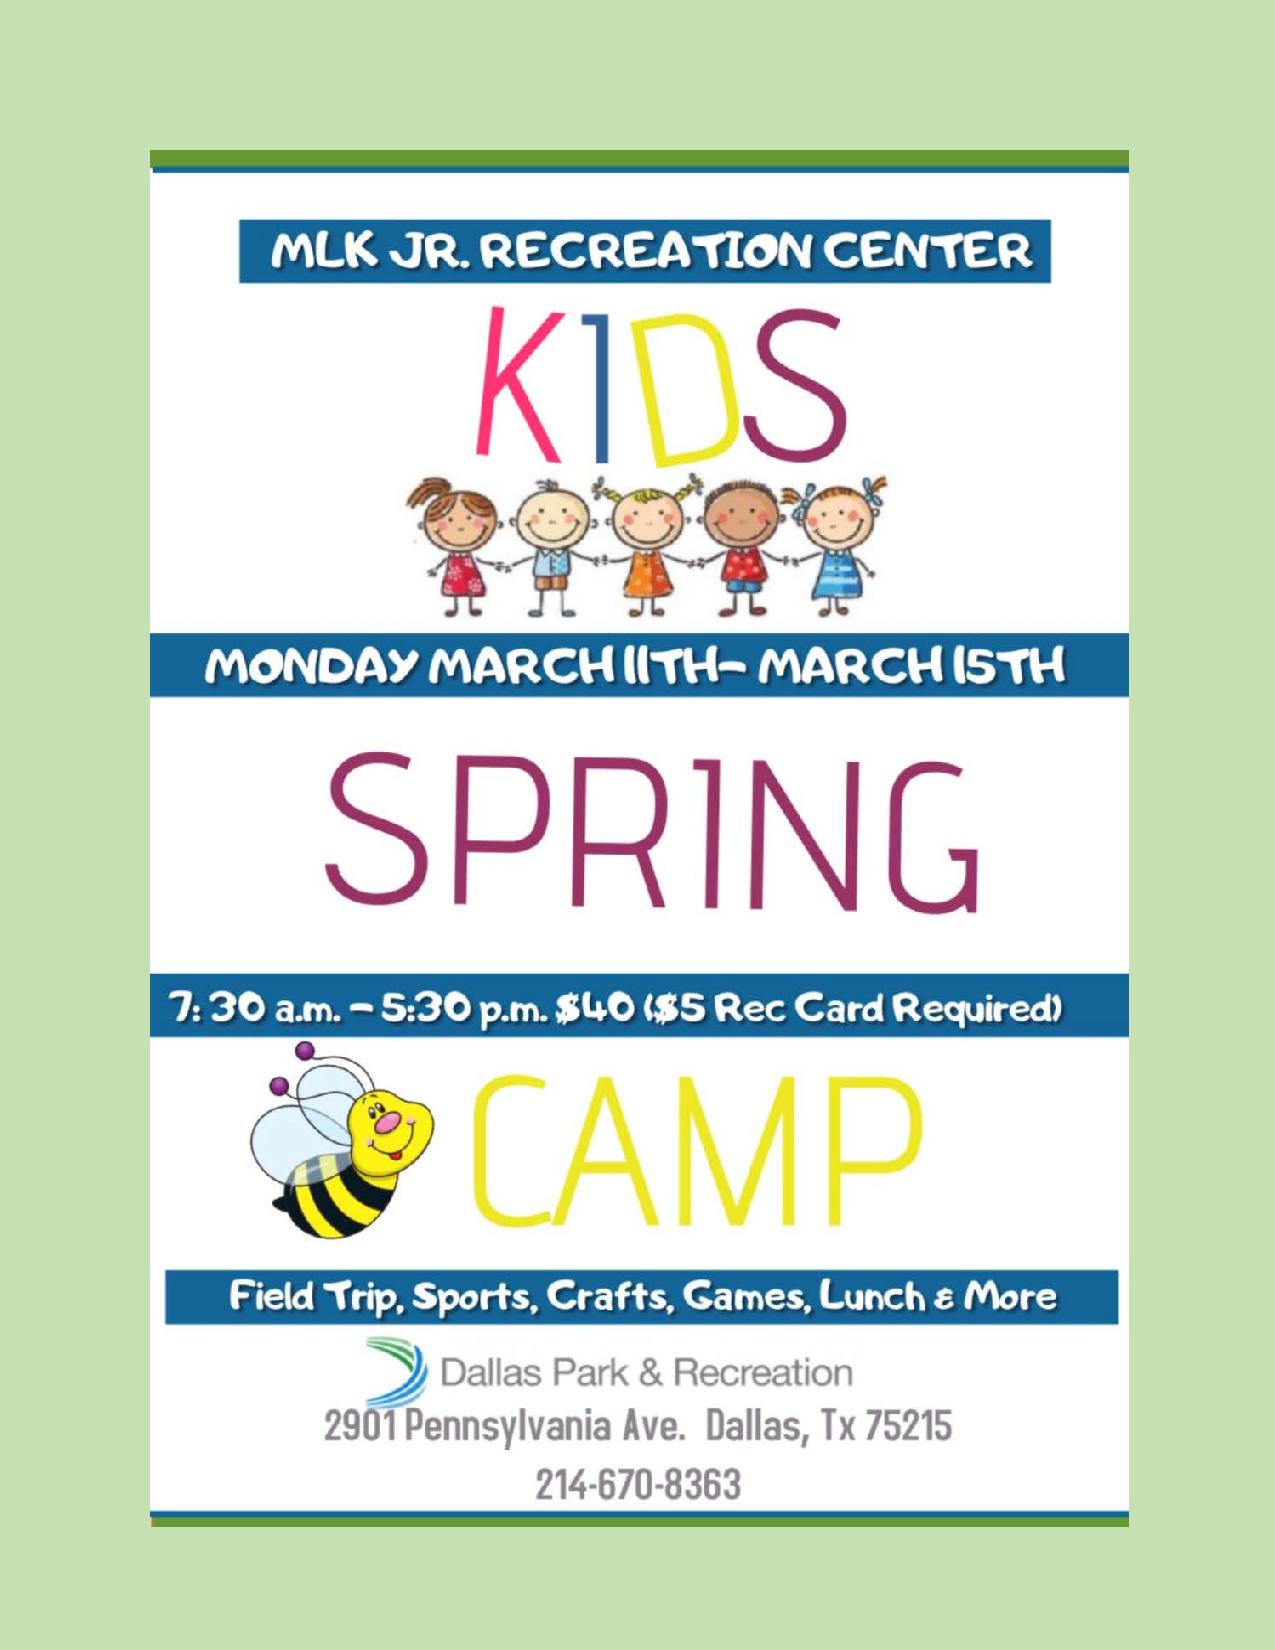 Kids Spring Camp (MLK Recreation Center) @ MLK, Jr. Recreation Center